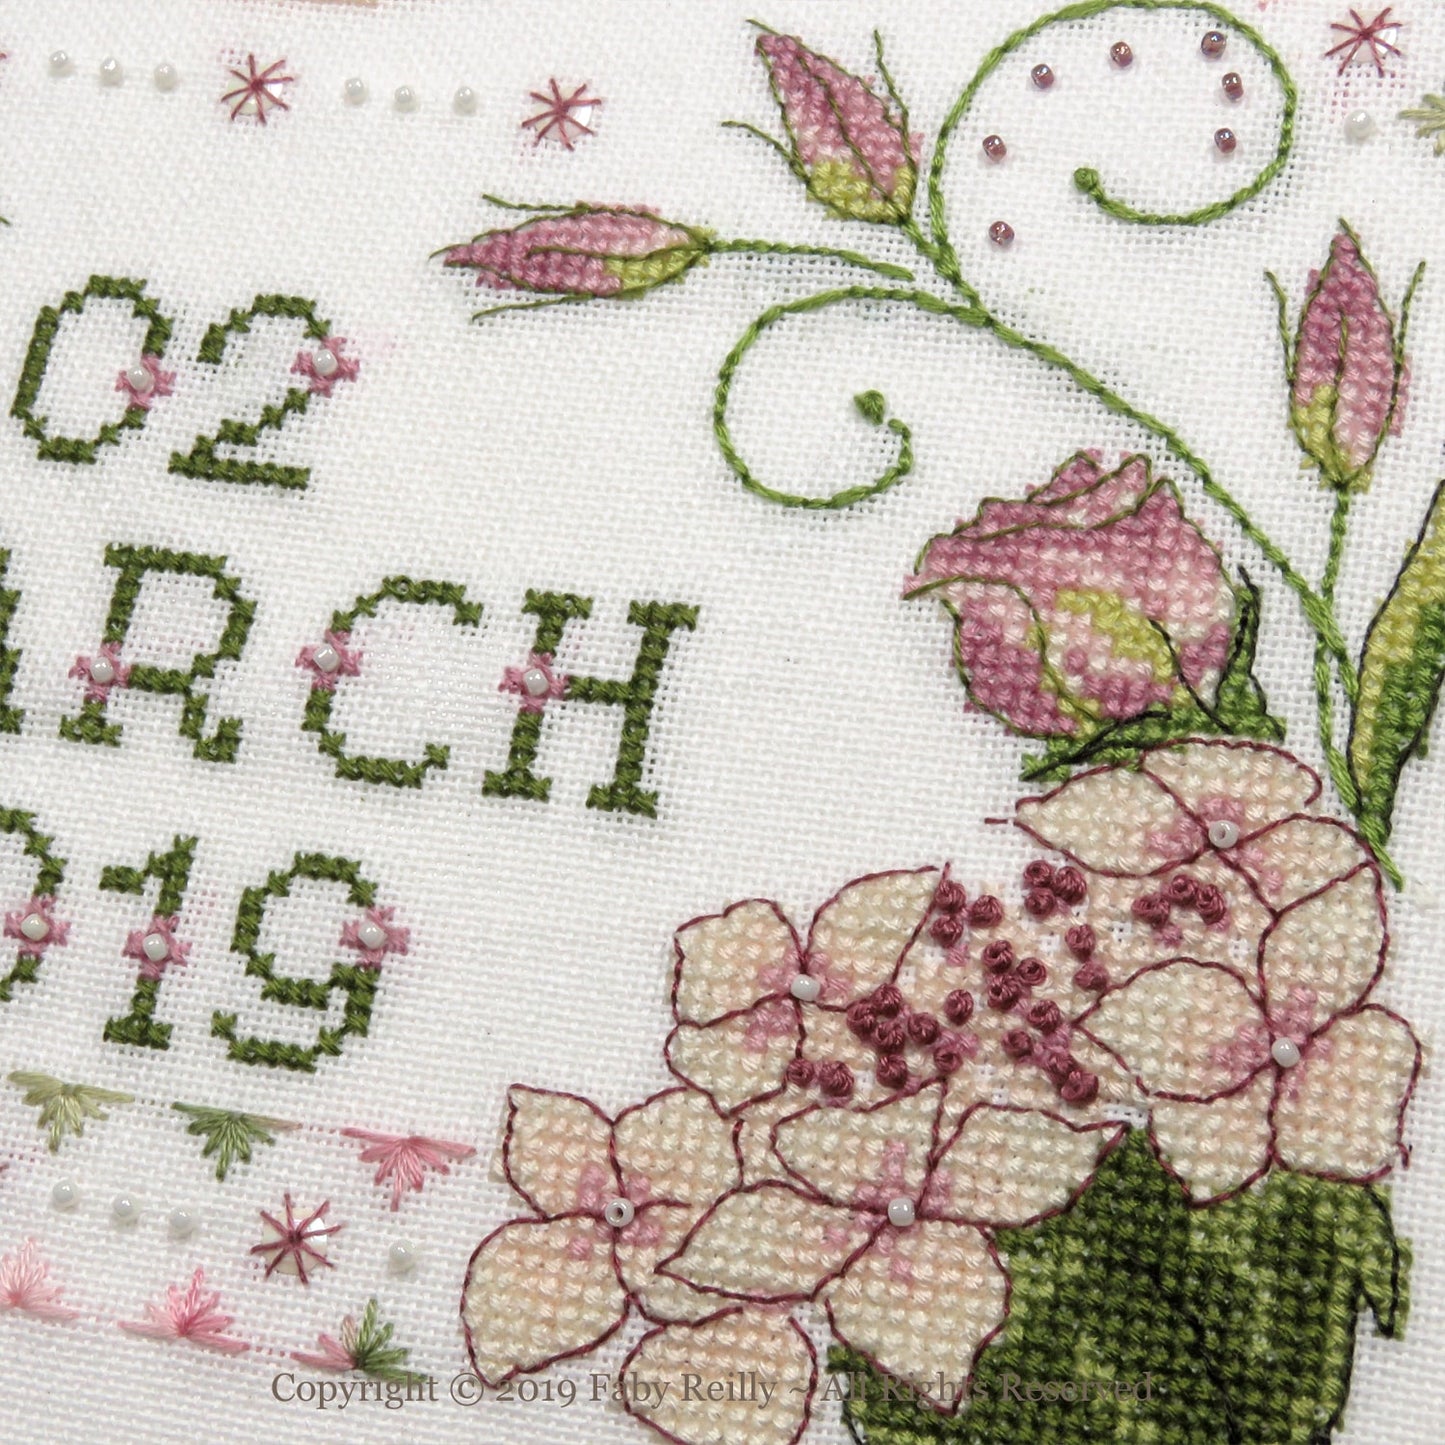 Lizzie Wedding Sampler counted cross stitch chart